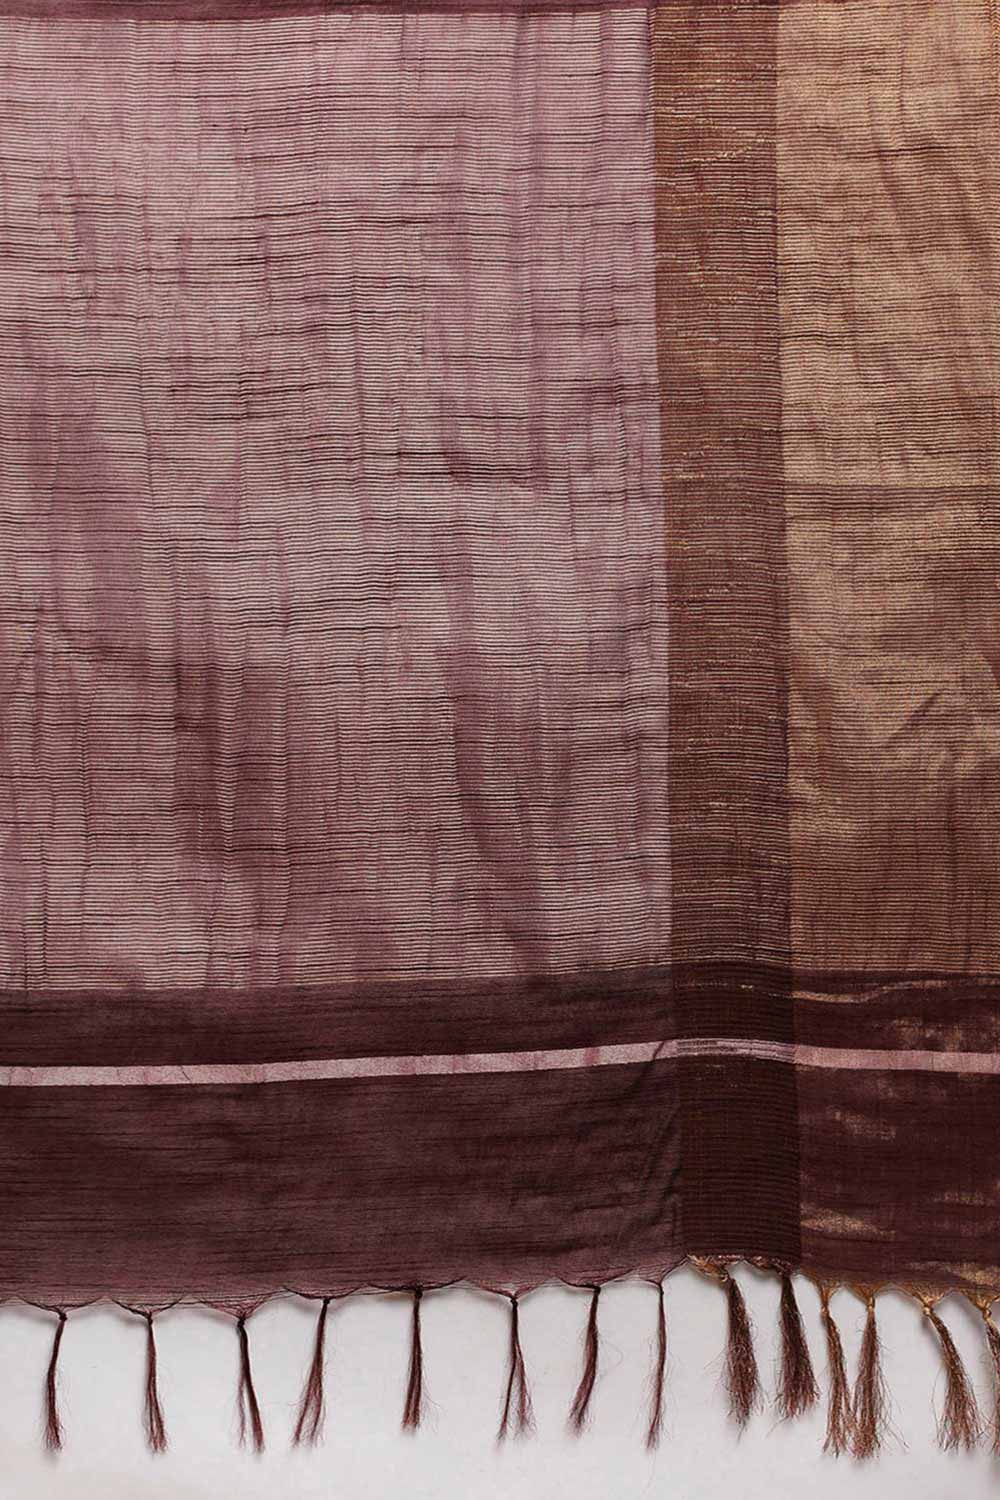 Buy Dark Brown Zari Woven Blended Silk One Minute Saree Online - Side